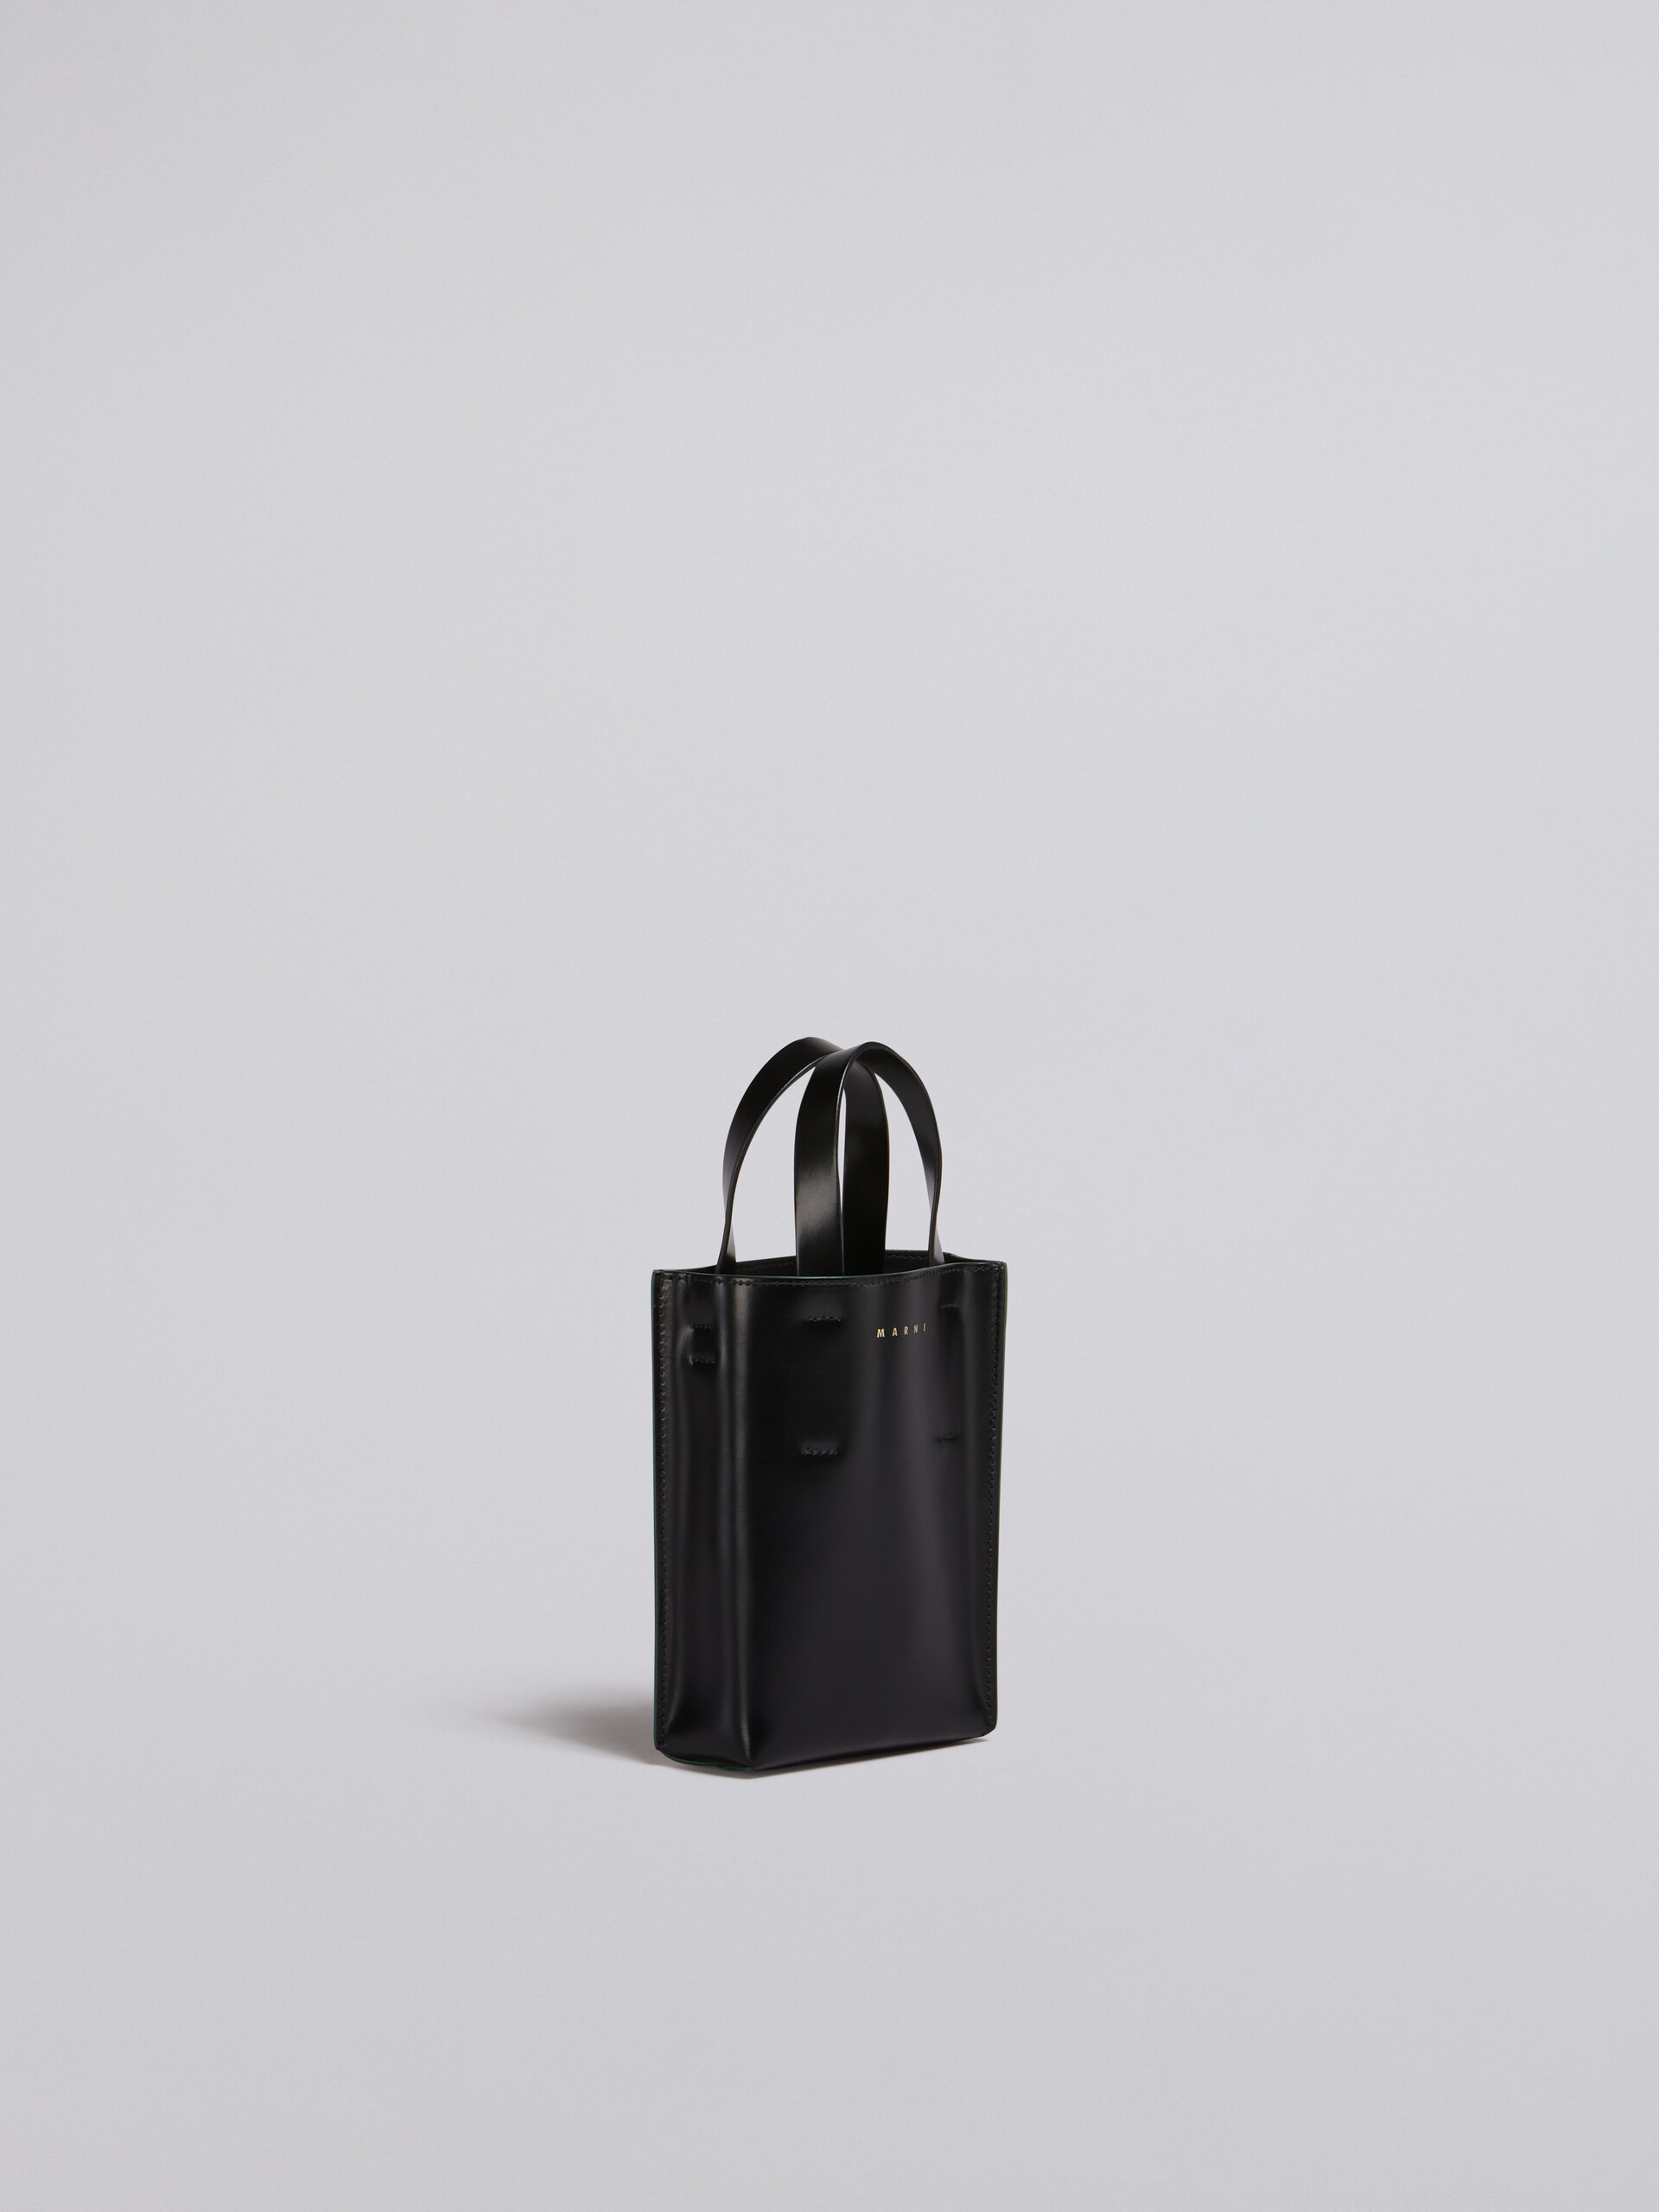 Borsa shopping MUSEO nano in vitello liscio lucido nero con tracolla - Borse shopping - Image 5